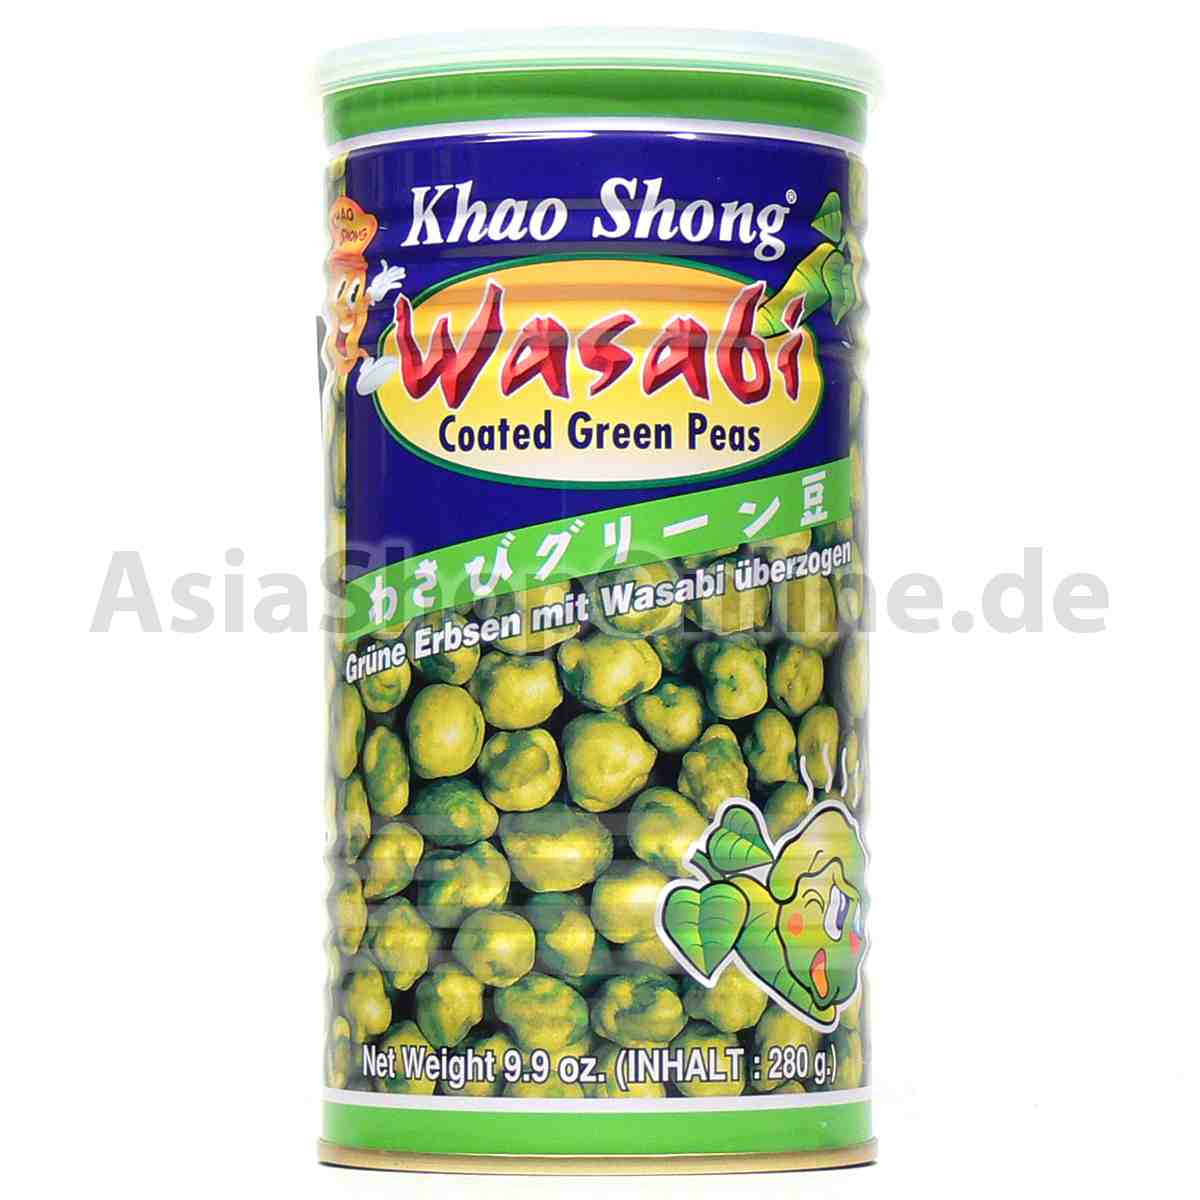 Wasabi-Erbsen Grüne Erbsen mit Wasabi überzogen - Khao Shong - 280g